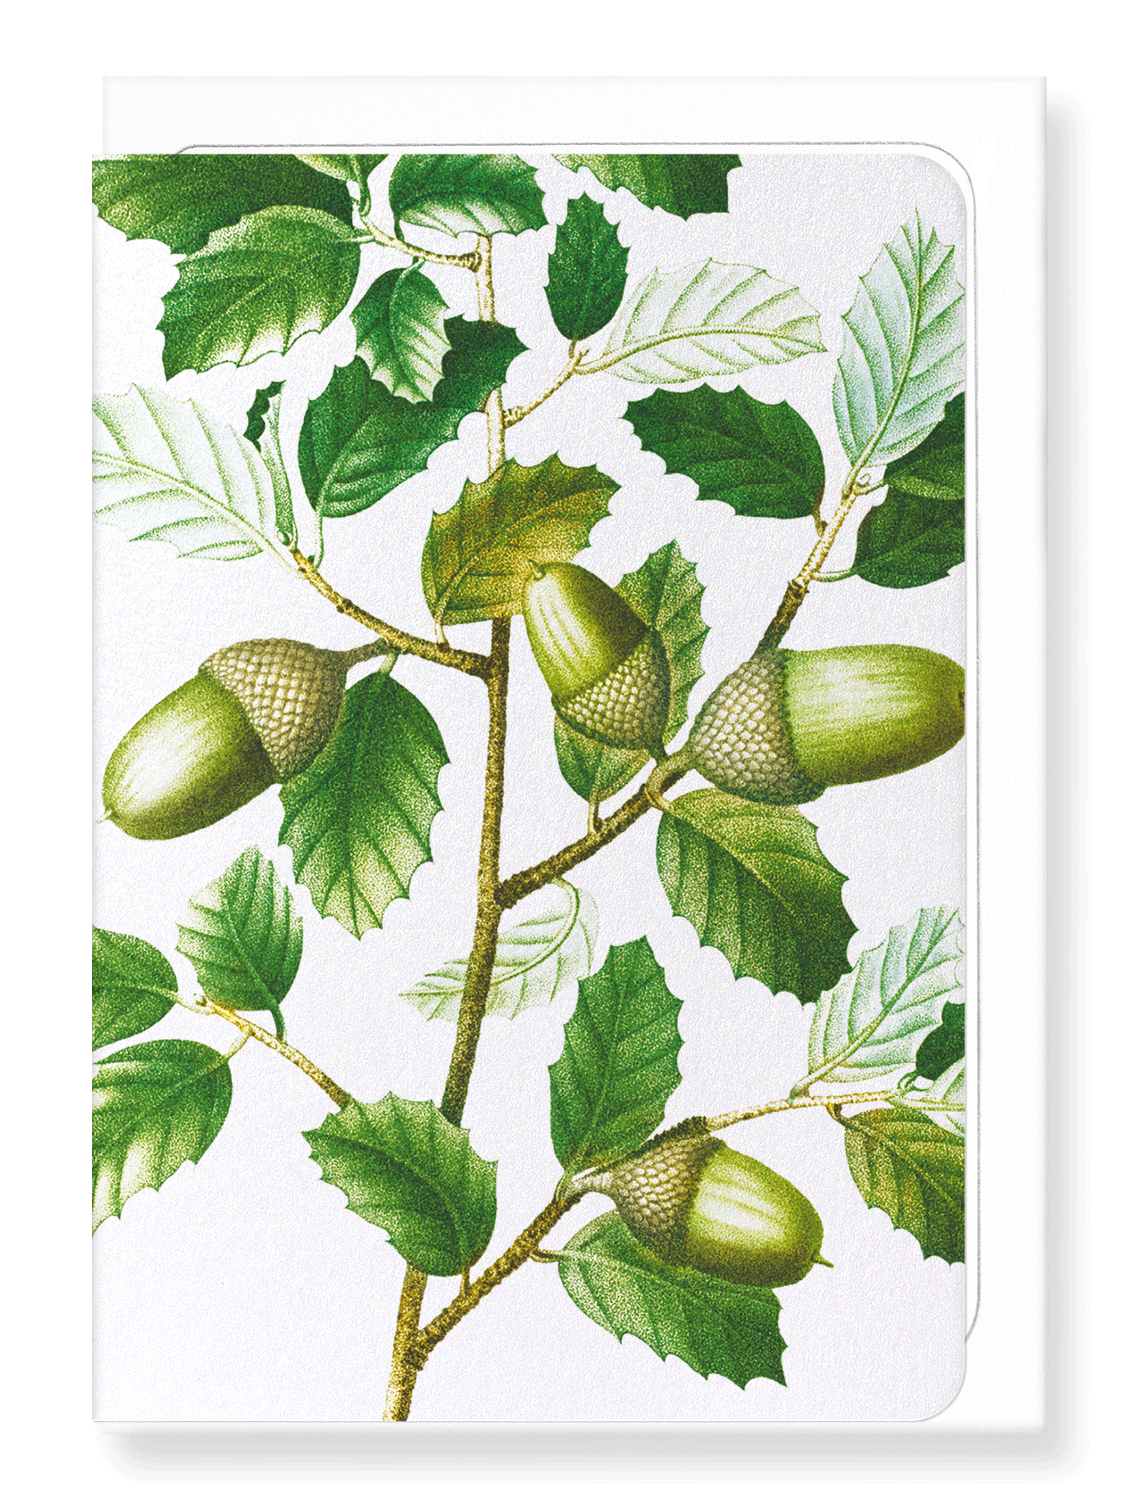 Ezen Designs - Cork oak tree acorns (detail) - Greeting Card - Front